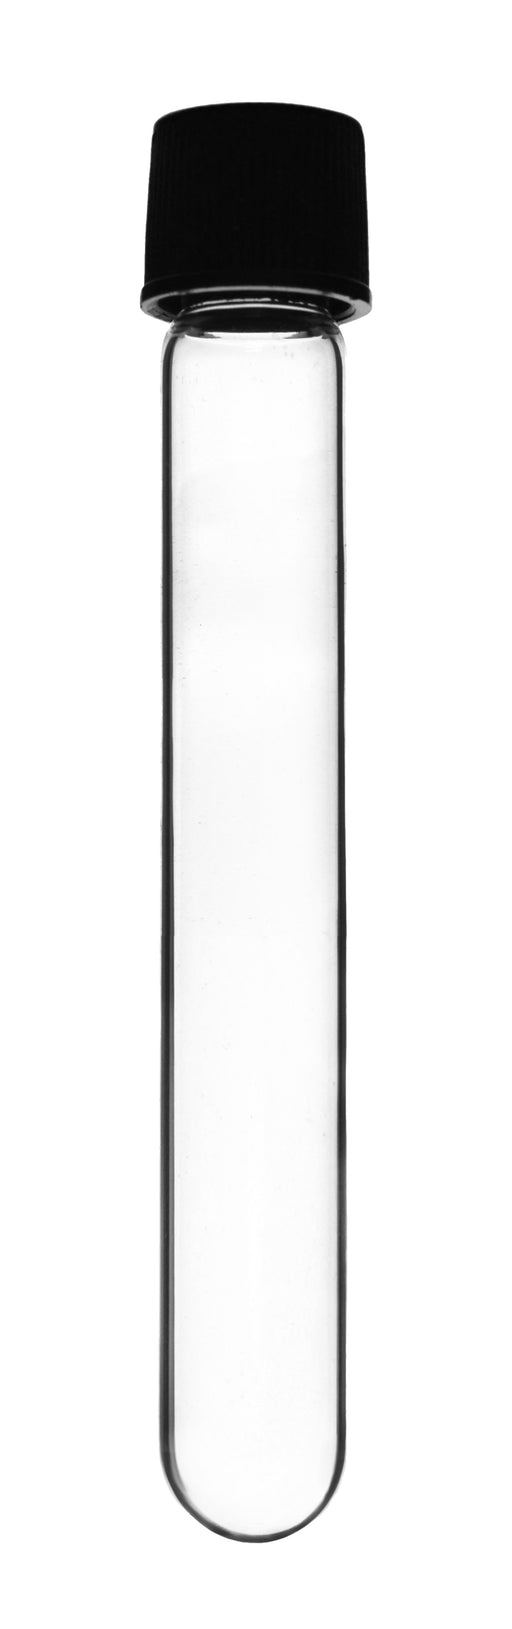 Culture Tube with Screw Cap, 10mL, 12/PK - 16x100mm - Marking Spot - Round Bottom - Borosilicate Glass